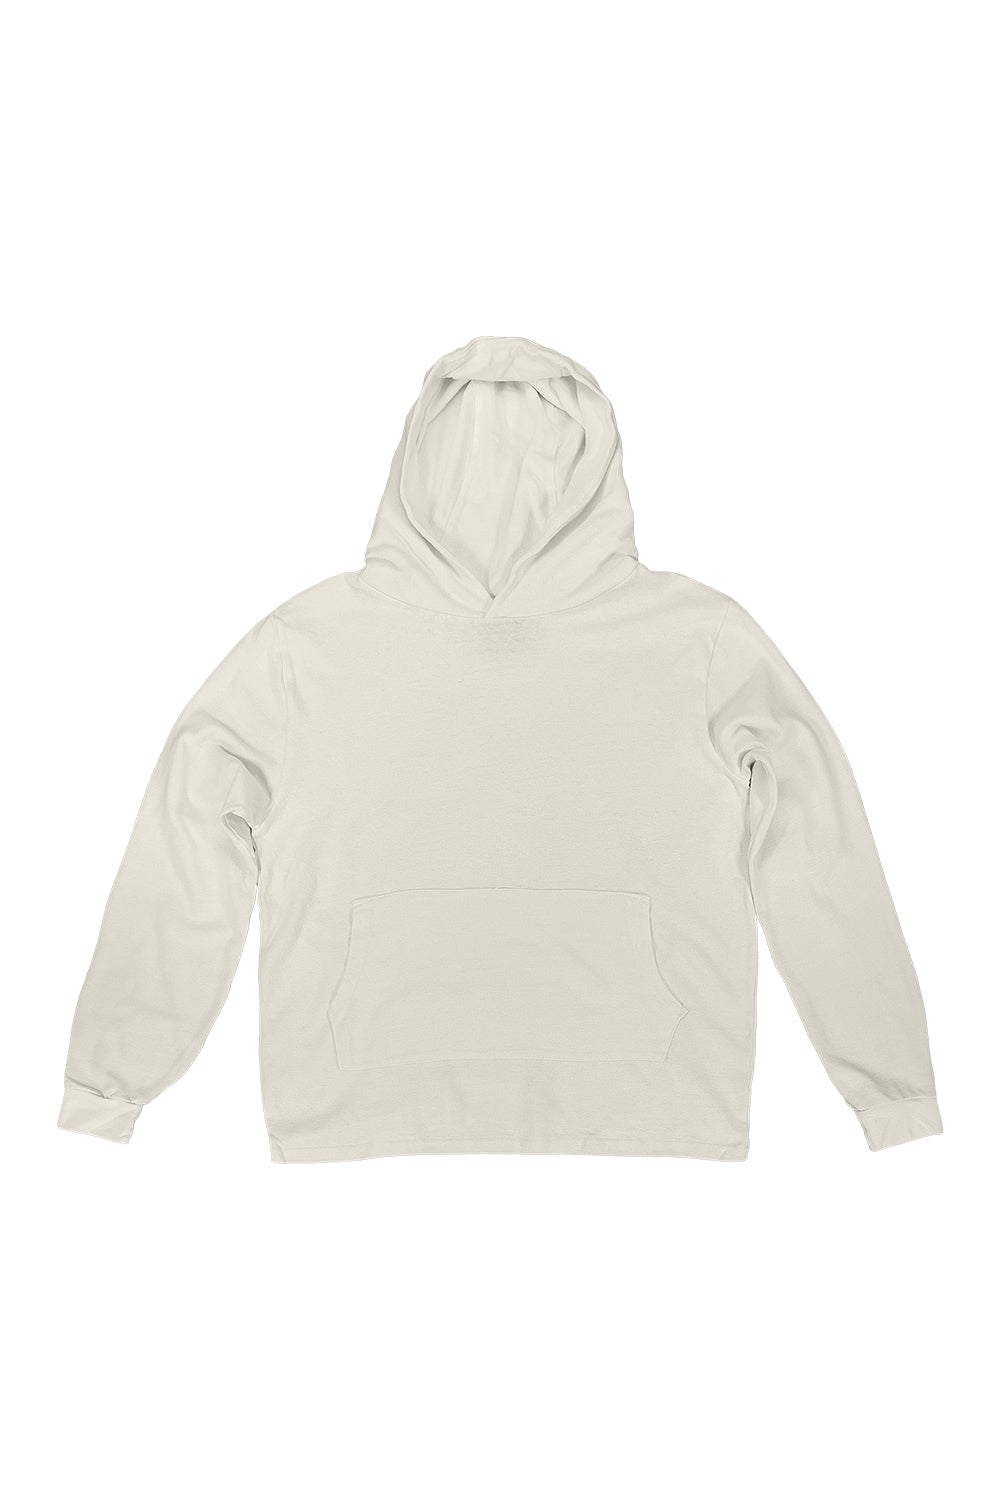 Santa Cruz Hooded Long Sleeve | Jungmaven Hemp Clothing & Accessories / Color: Washed White